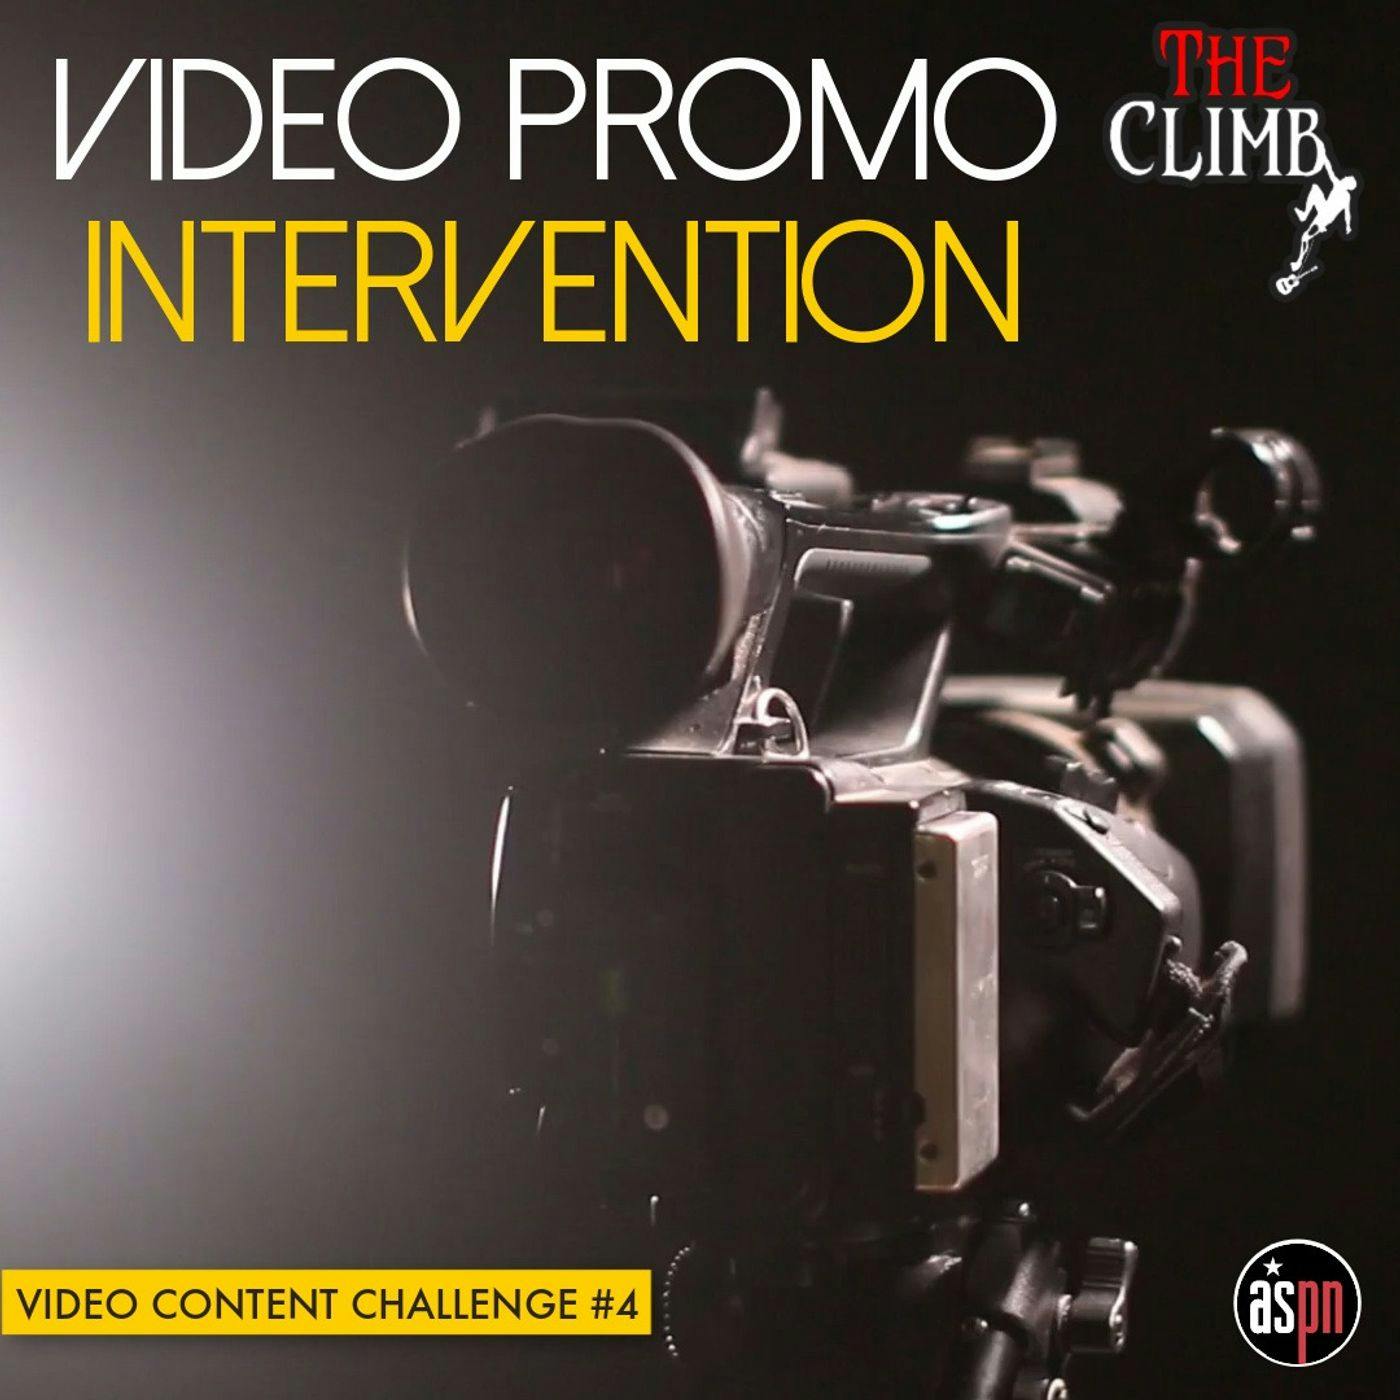 Video Content Challenge #4: Video Promo INTERVENTION